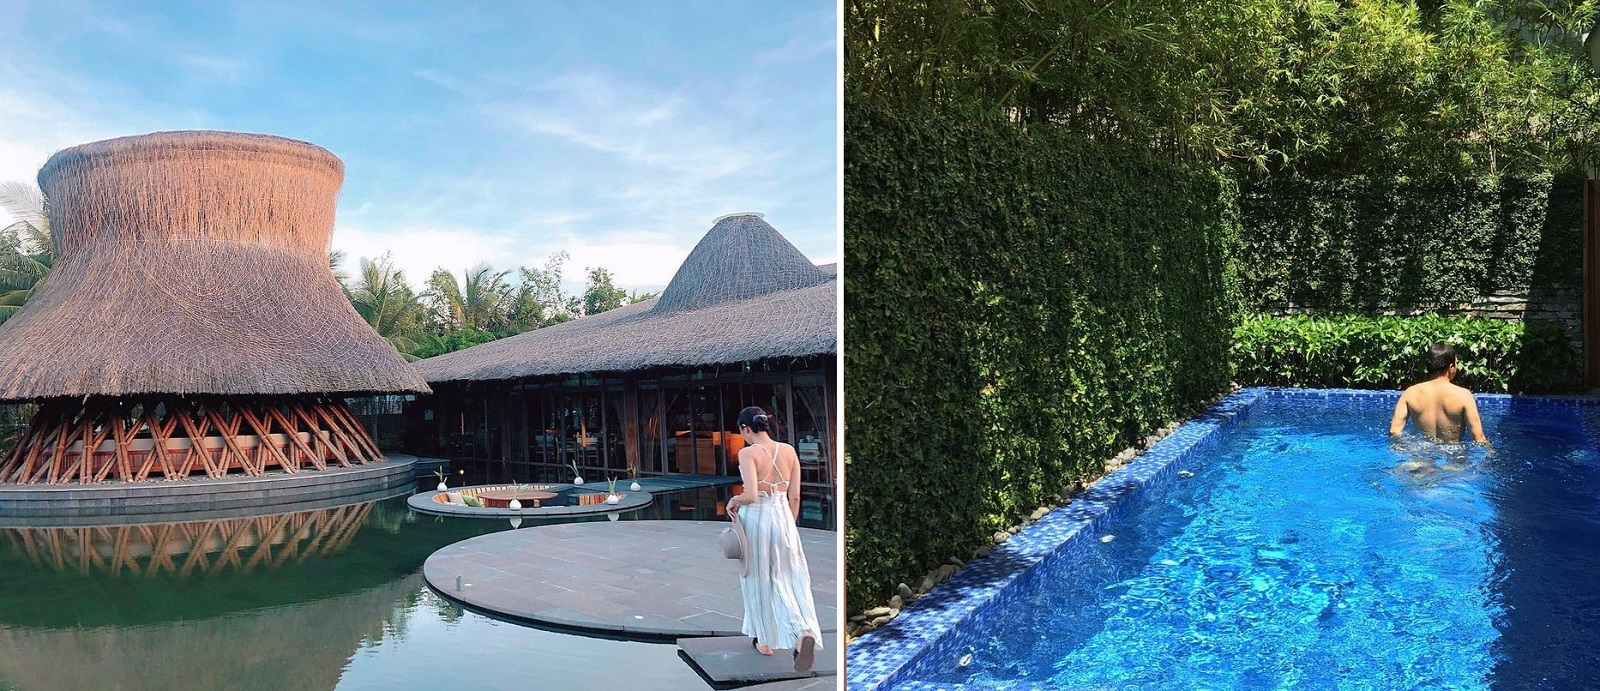 danang hotels - naman retreat pool and grounds